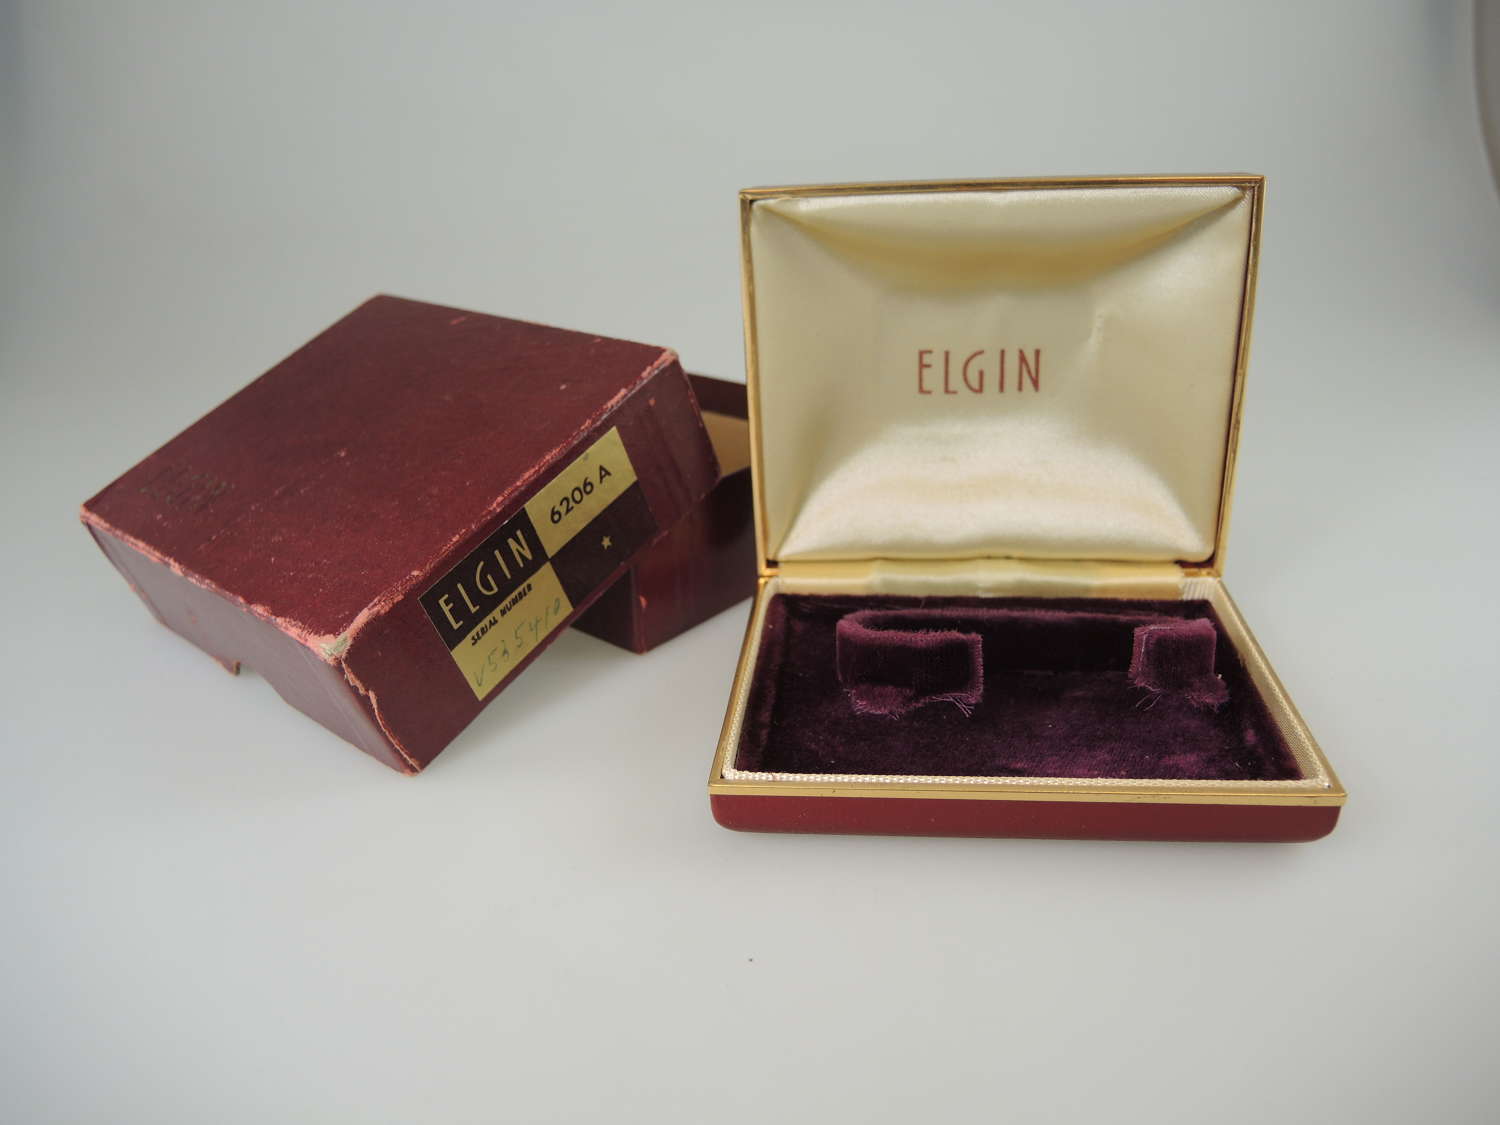 Elgin Wrist Watch box inc outer cardboard sleeve c1945